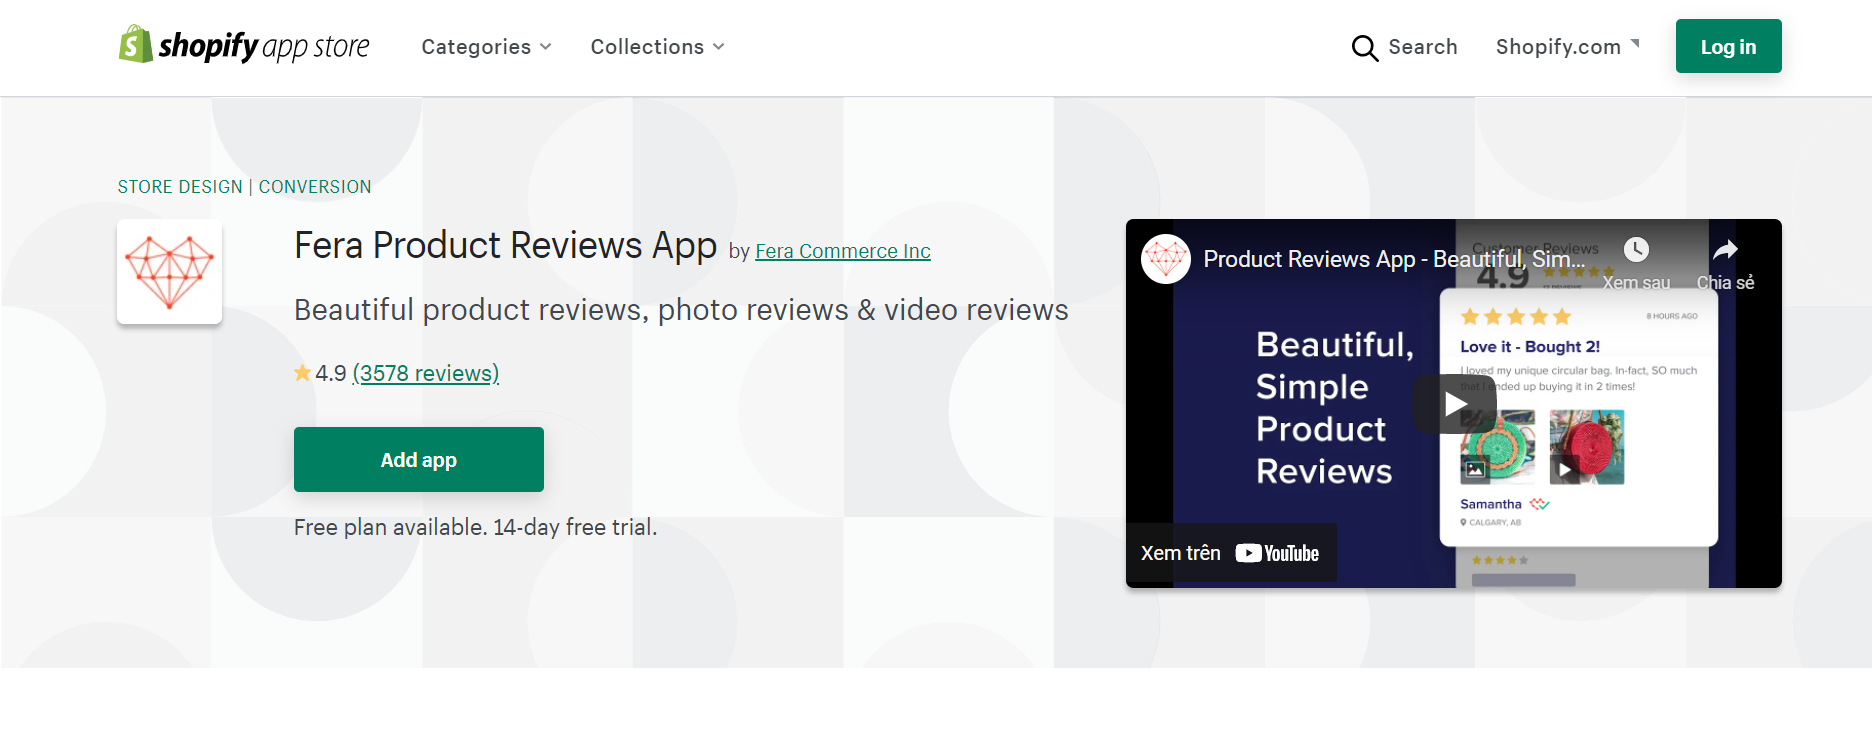 fera product reviews app